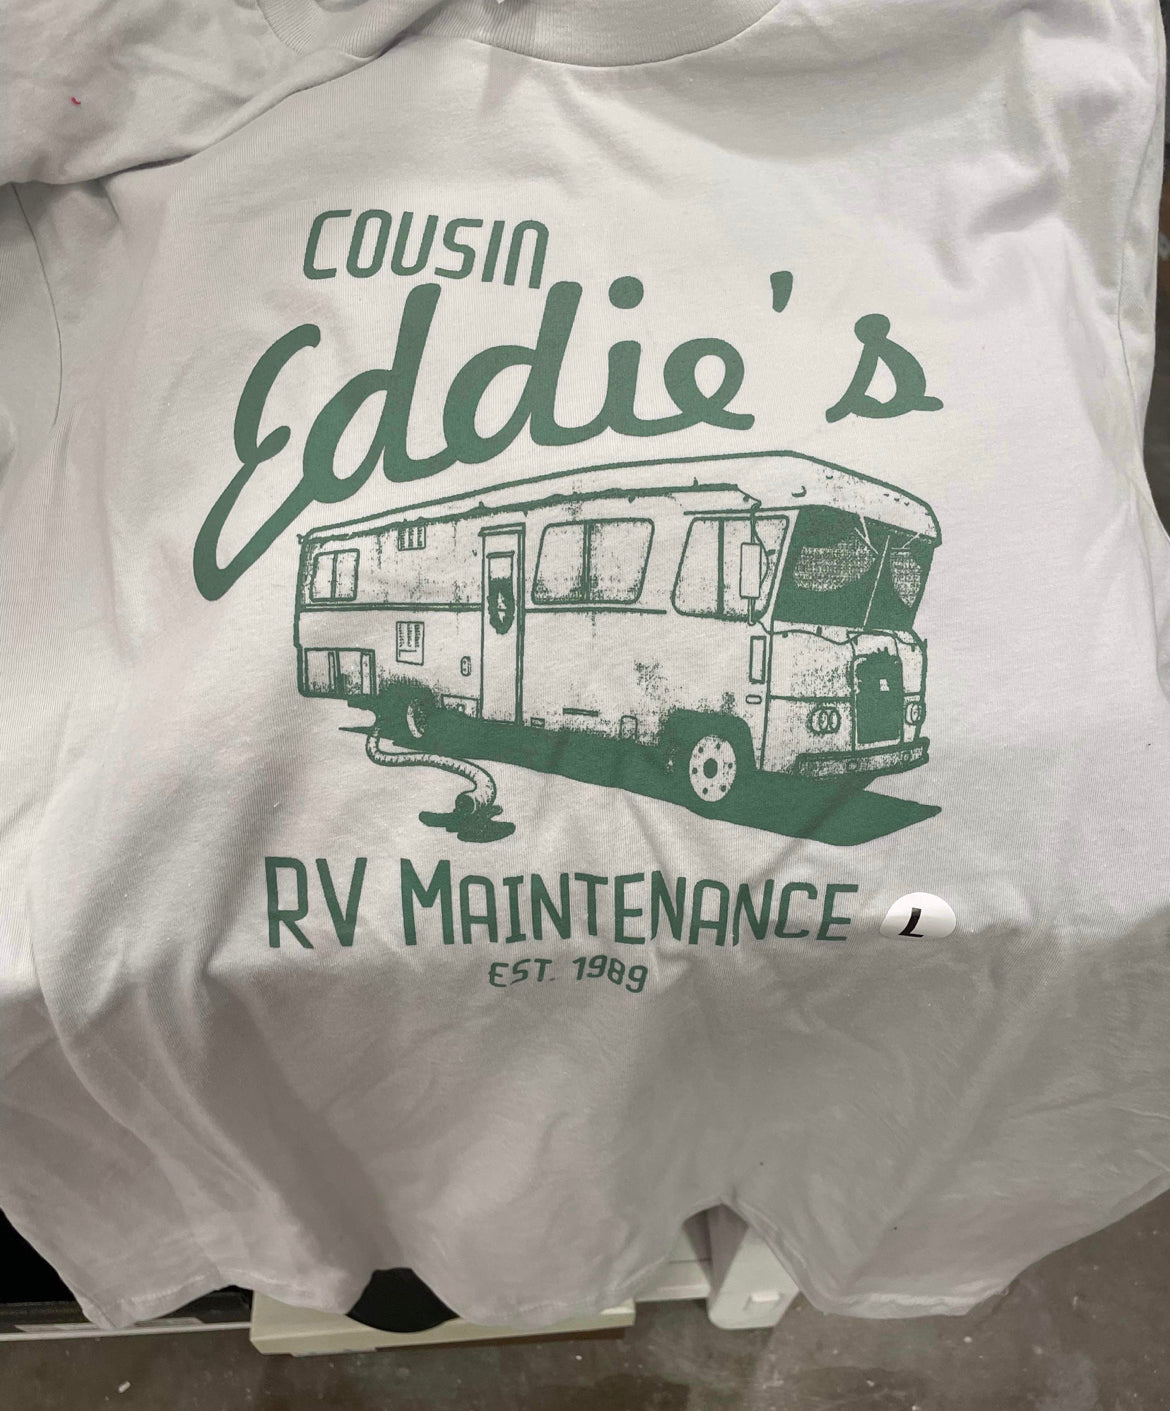 Cousin Eddie’s RV Maintenance Teeshirt